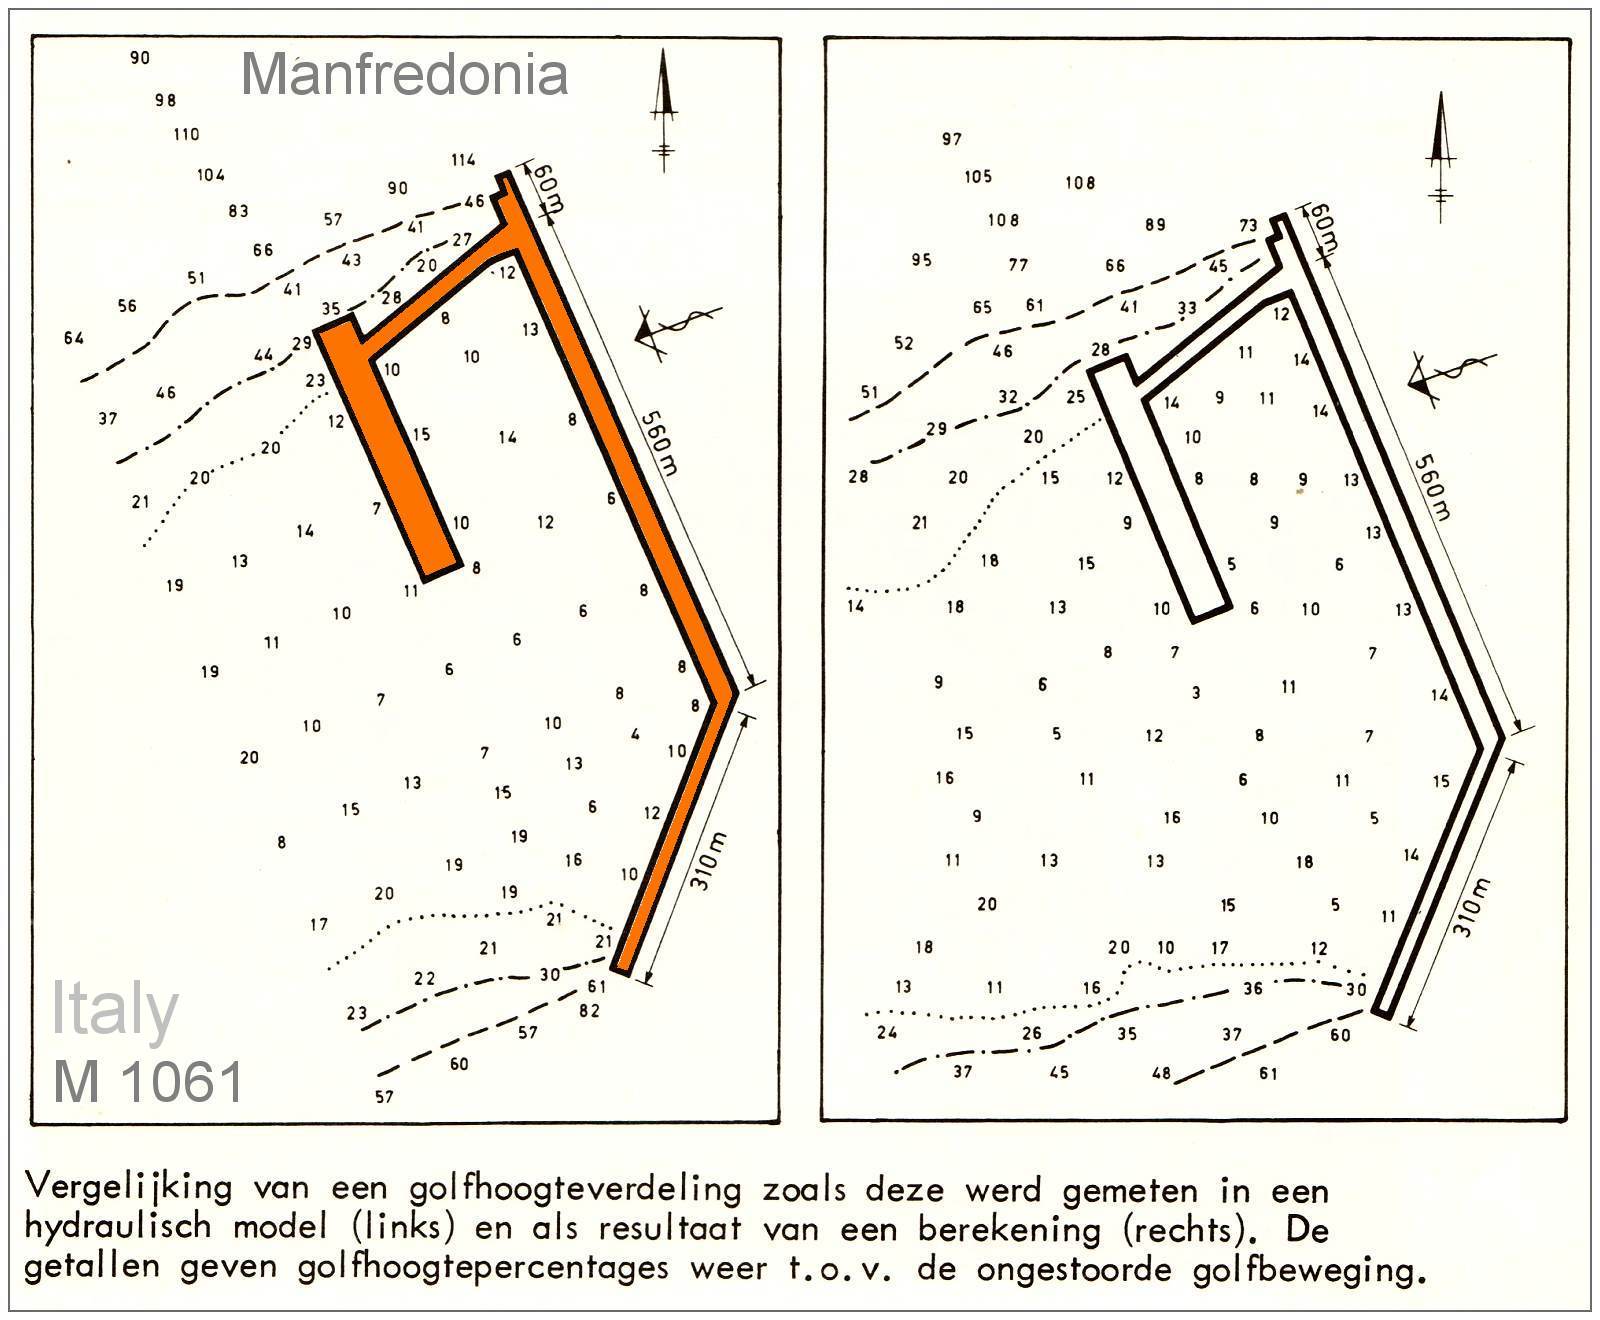 M 1061 - Manfredonia - comparison wave-height (Hydraulic versus Mathematical)